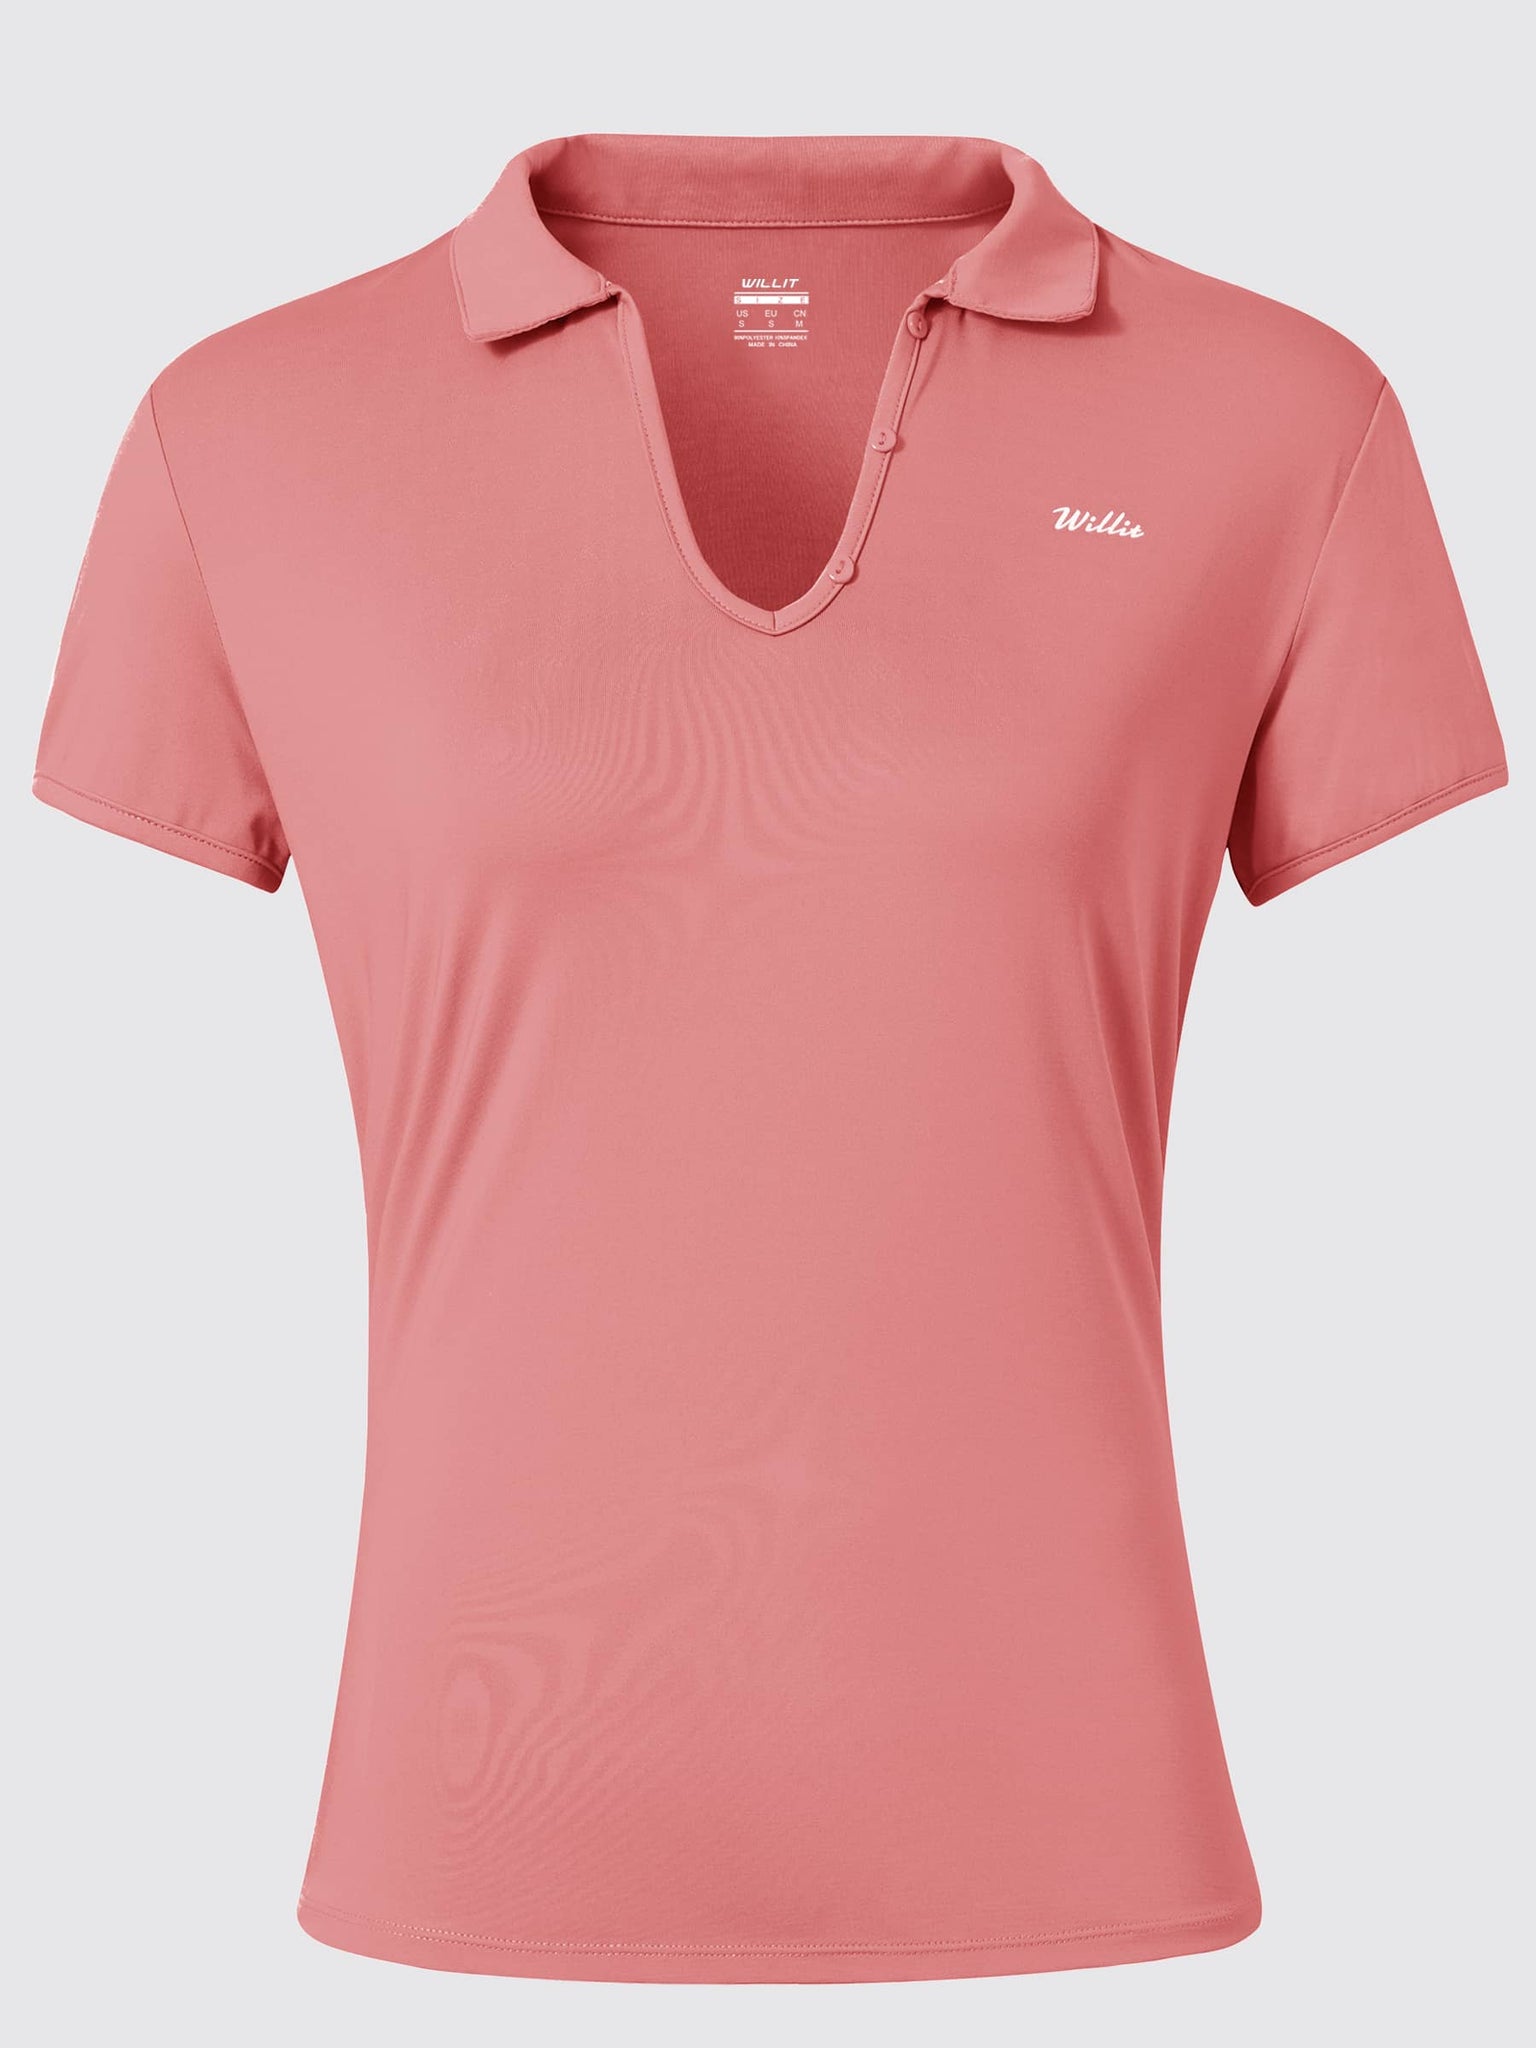 Willit Women's Golf Polo Short Sleeve Shirts_Salmon1